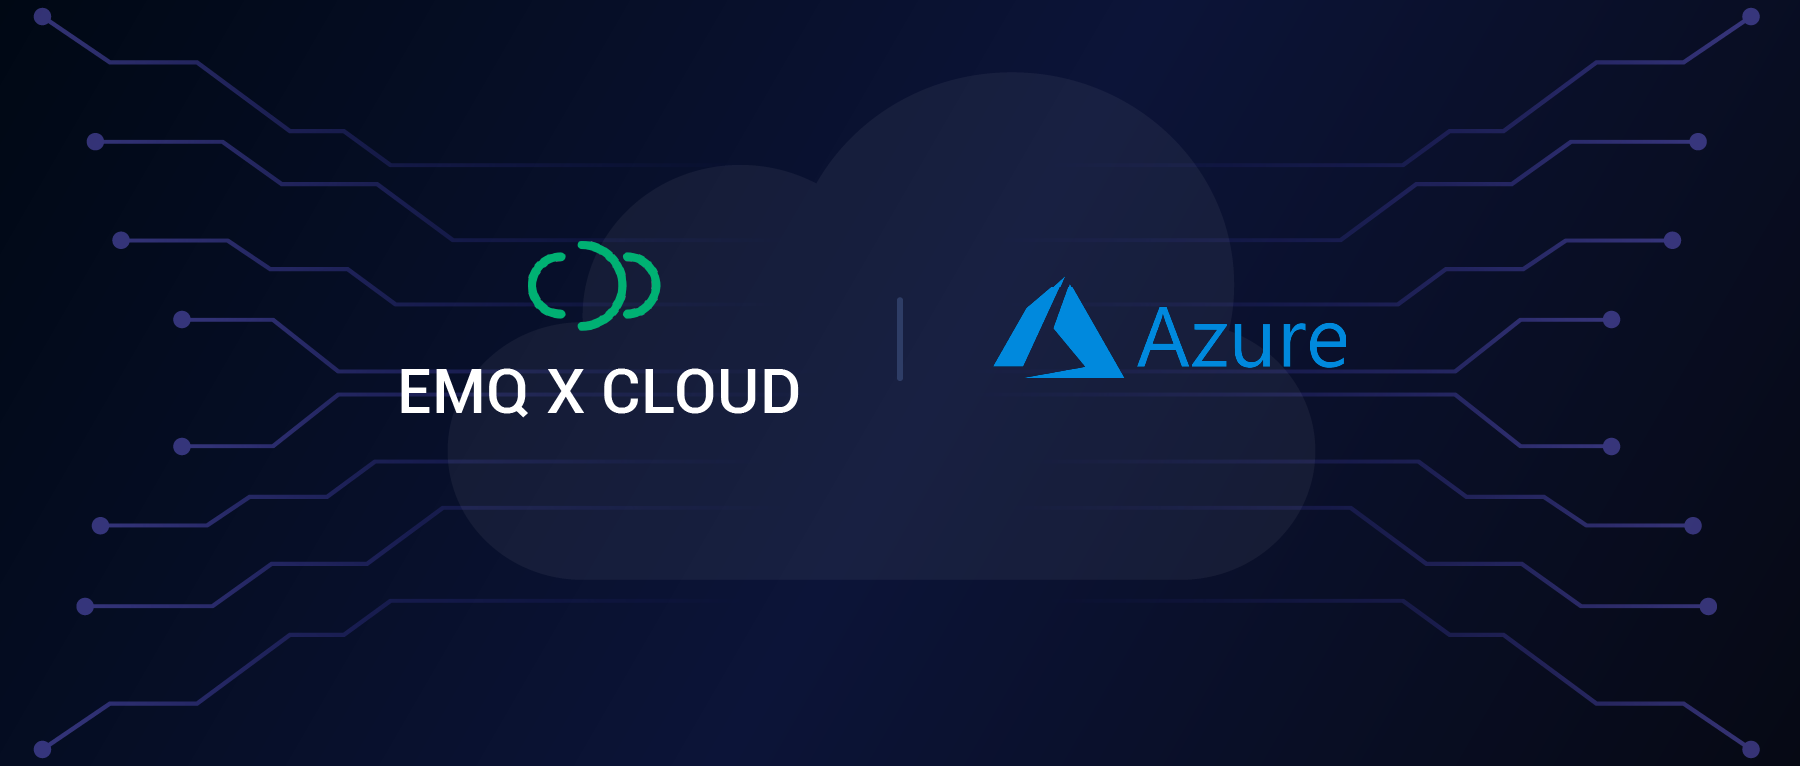 EMQ X Cloud 正式支持 Microsoft Azure 平台，助力企业出海业务